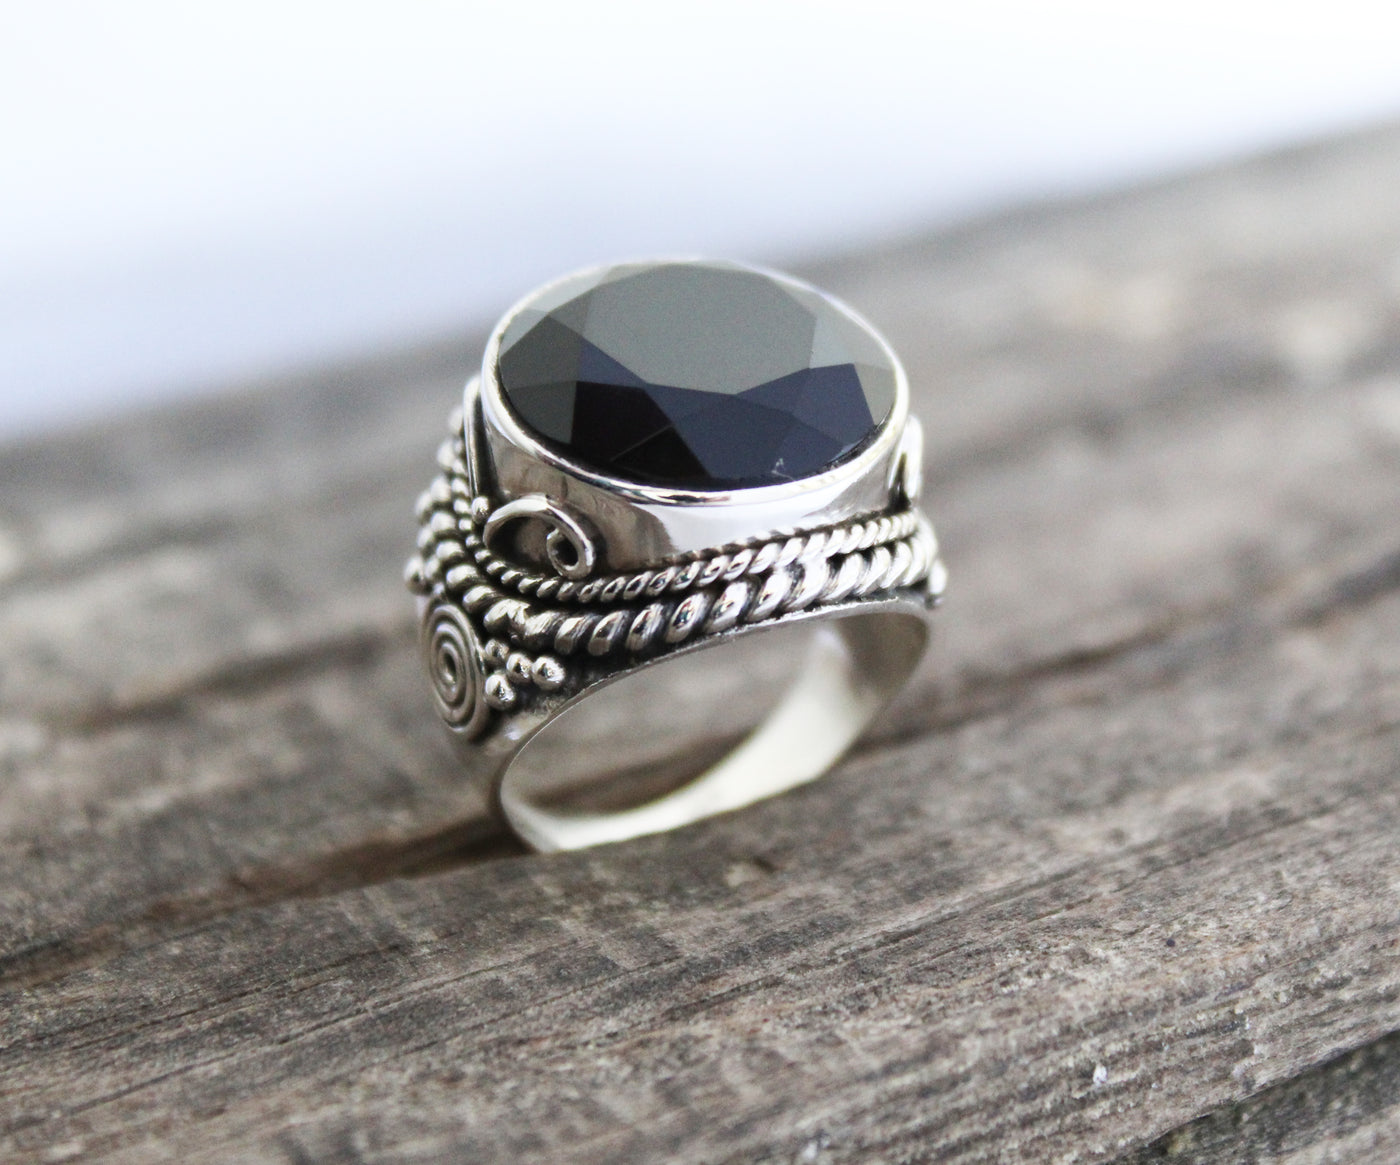 Natural Black Onyx Ring